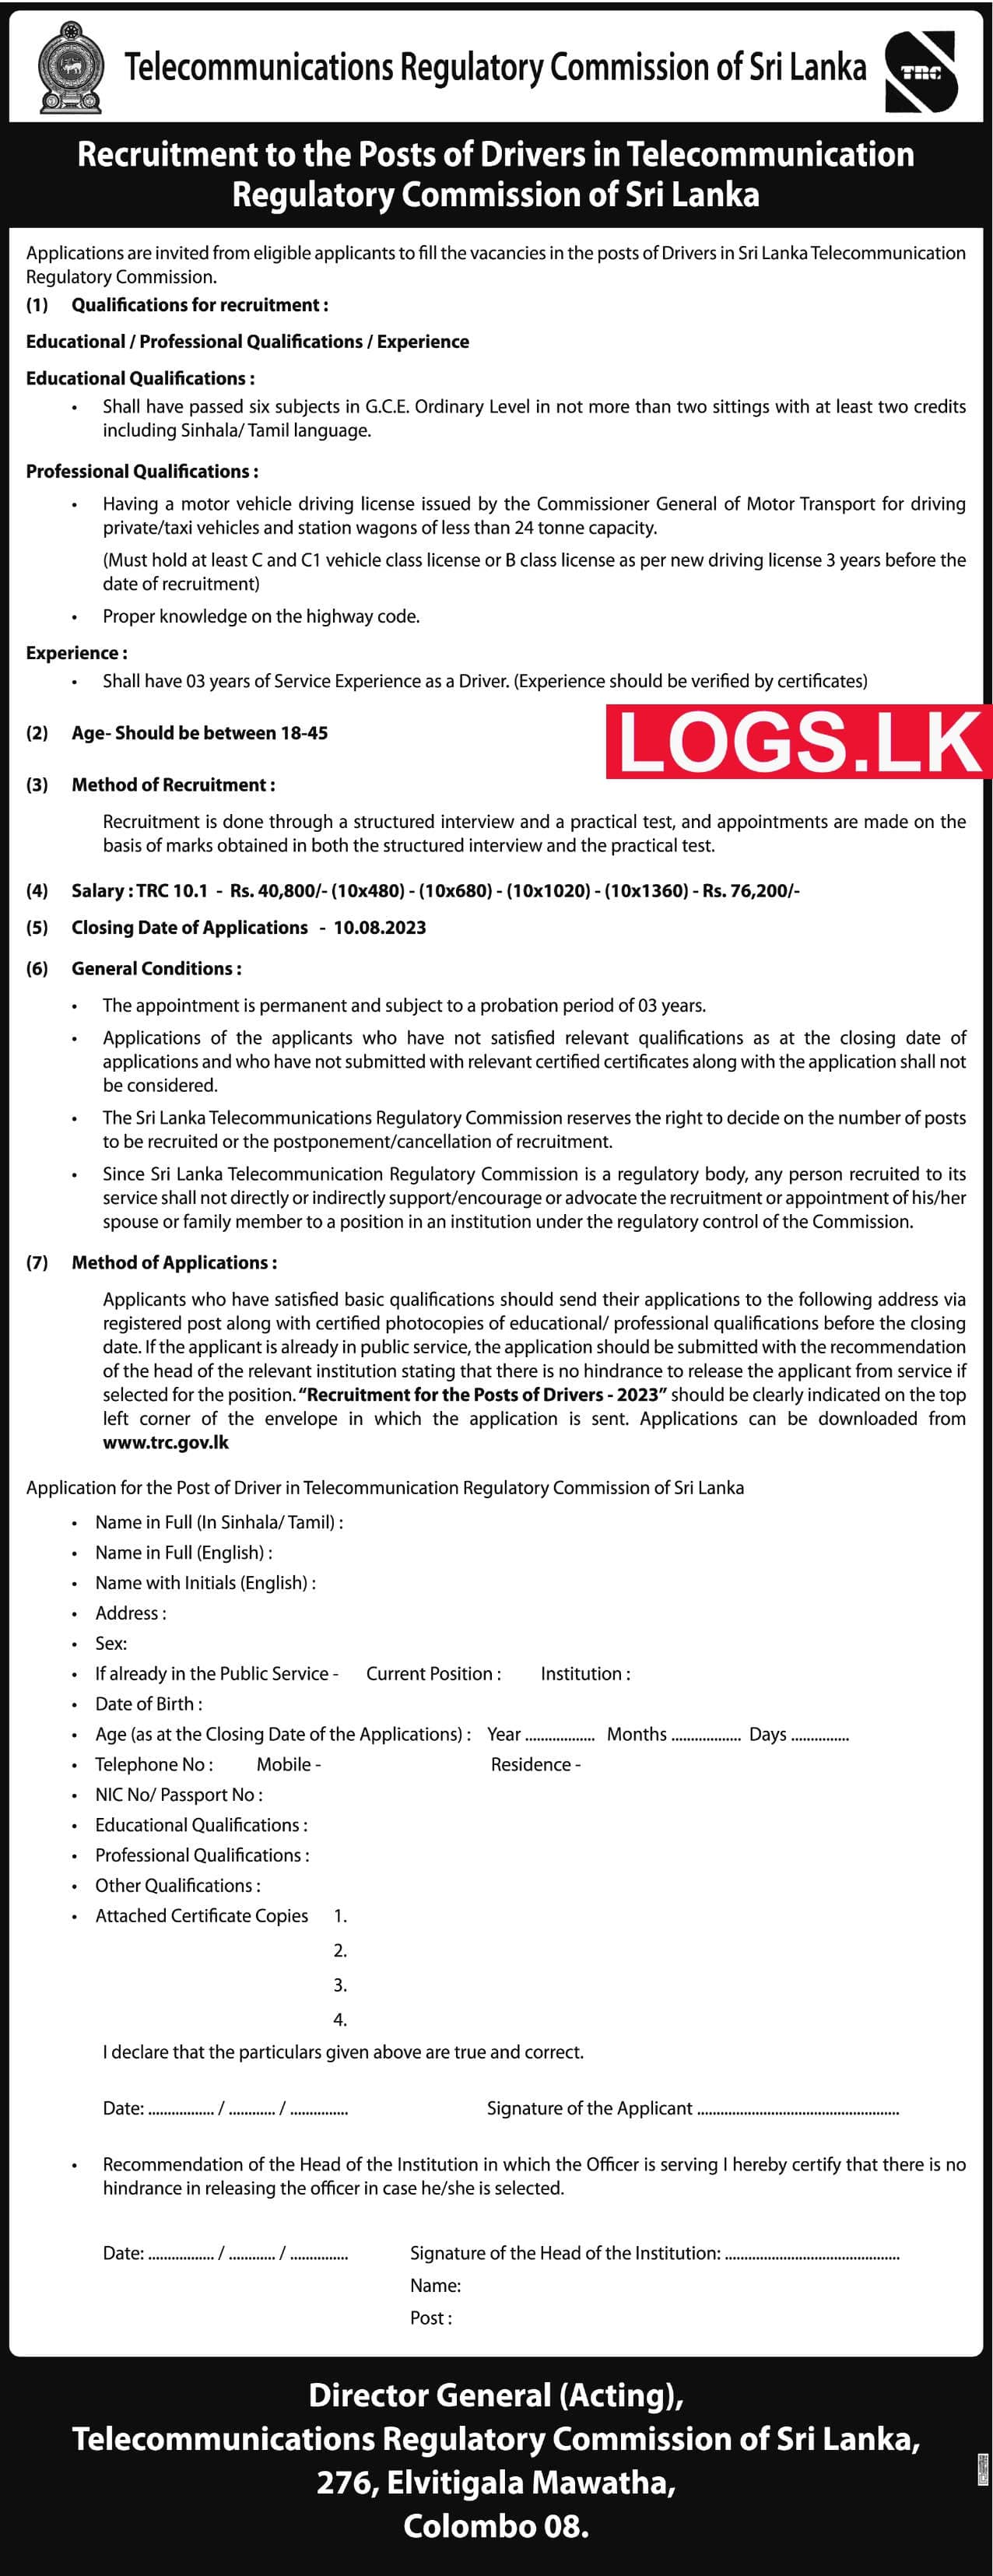 Telecommunications Regulatory Commission of Sri Lanka Job Vacancy